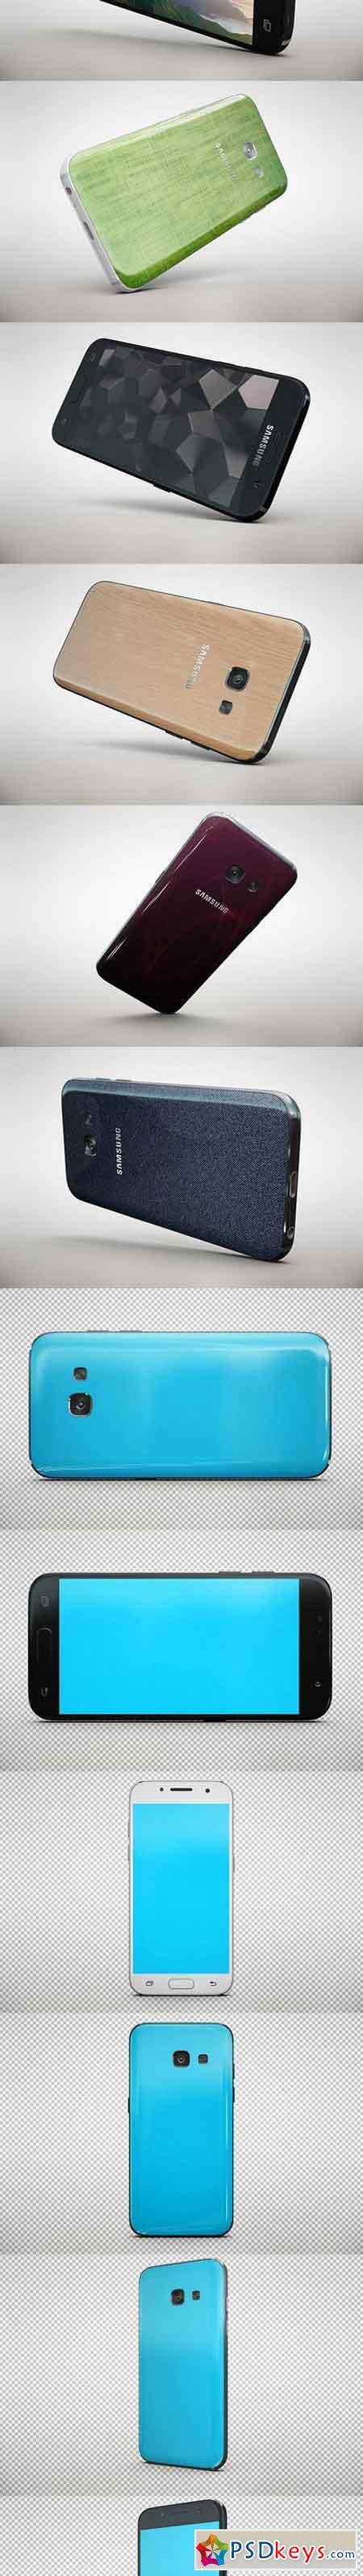 Bundle Samsung Galaxy A3 2017 MockUp 1303576